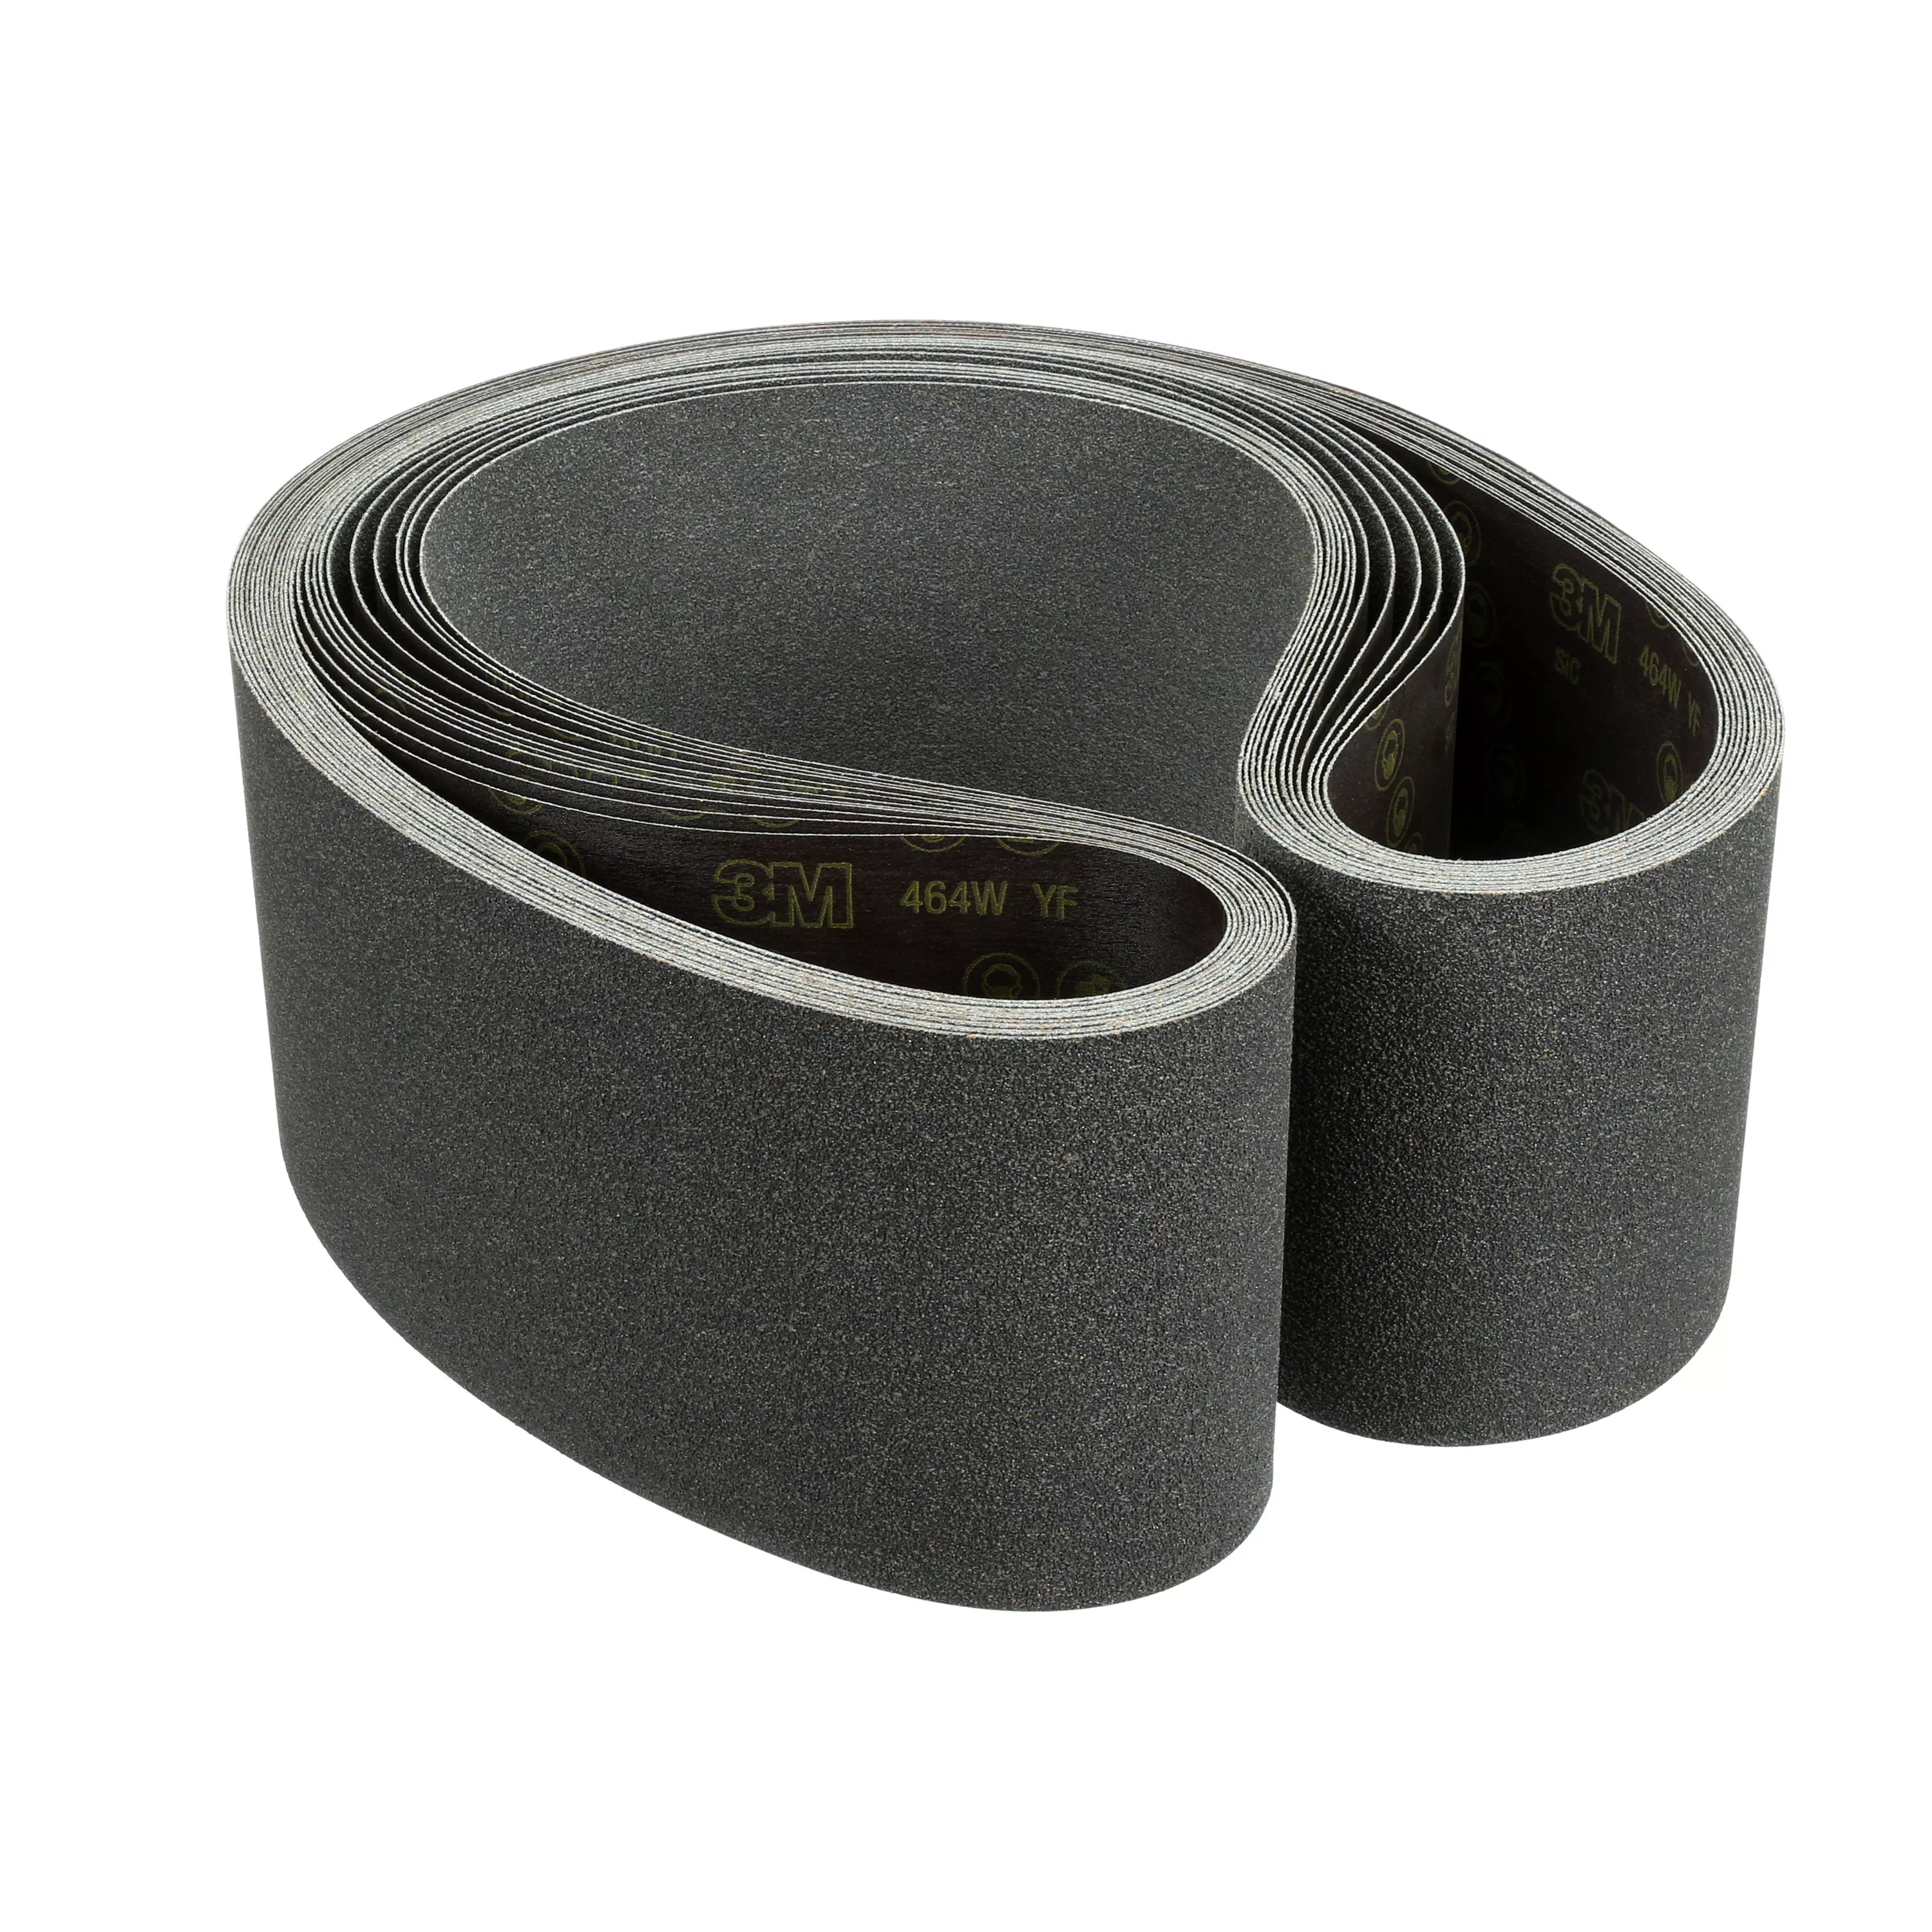 Product Number 464W | 3M™ Cloth Belt 464W